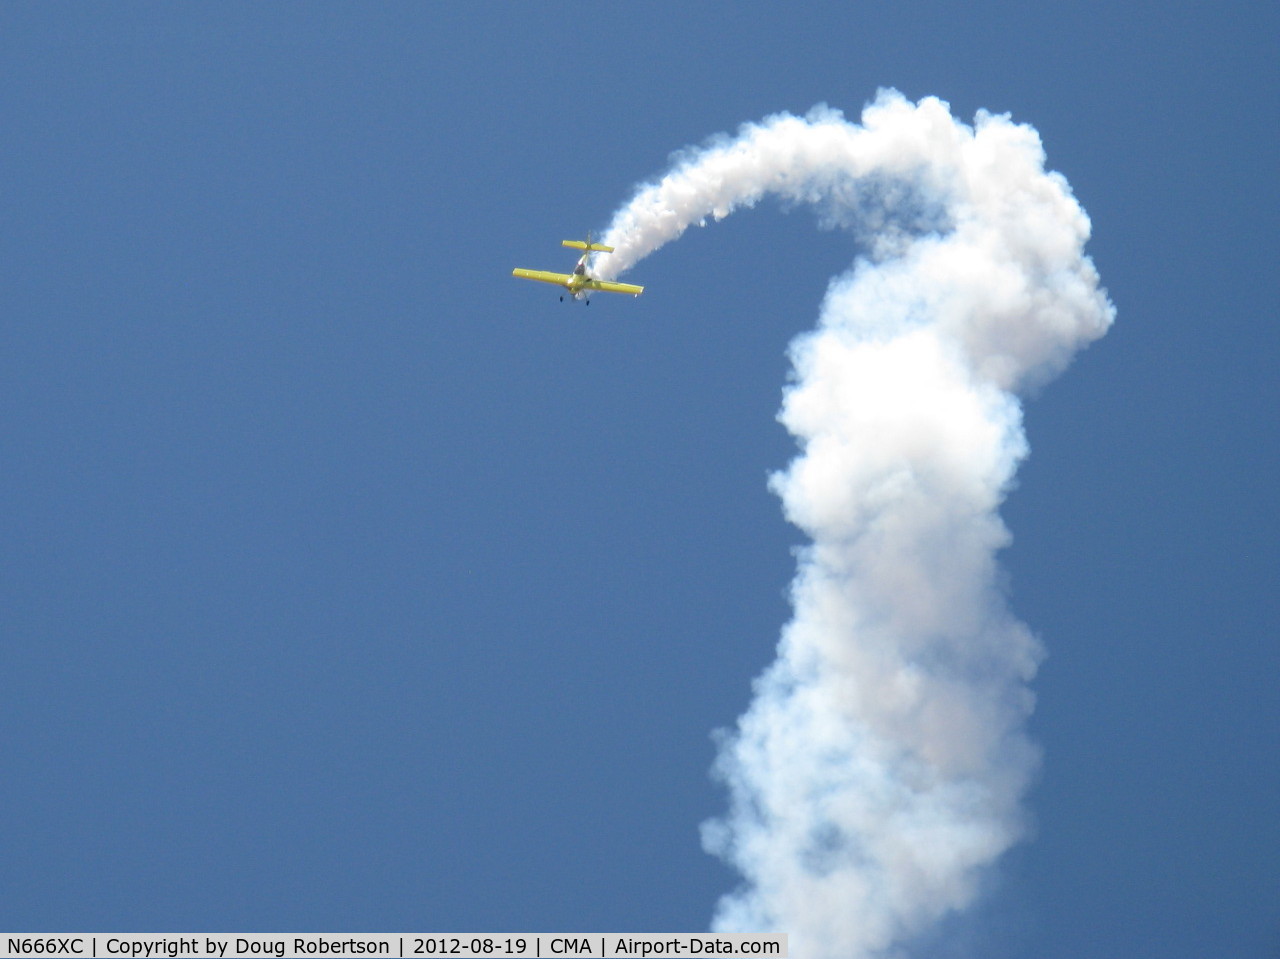 N666XC, 1997 Zlin Z-50LS C/N 0077, 1997 Moravan ZLIN Z50 LS 'Tumbling Bear', Lycoming IO-540 260 Hp, aerobatics act with smoke